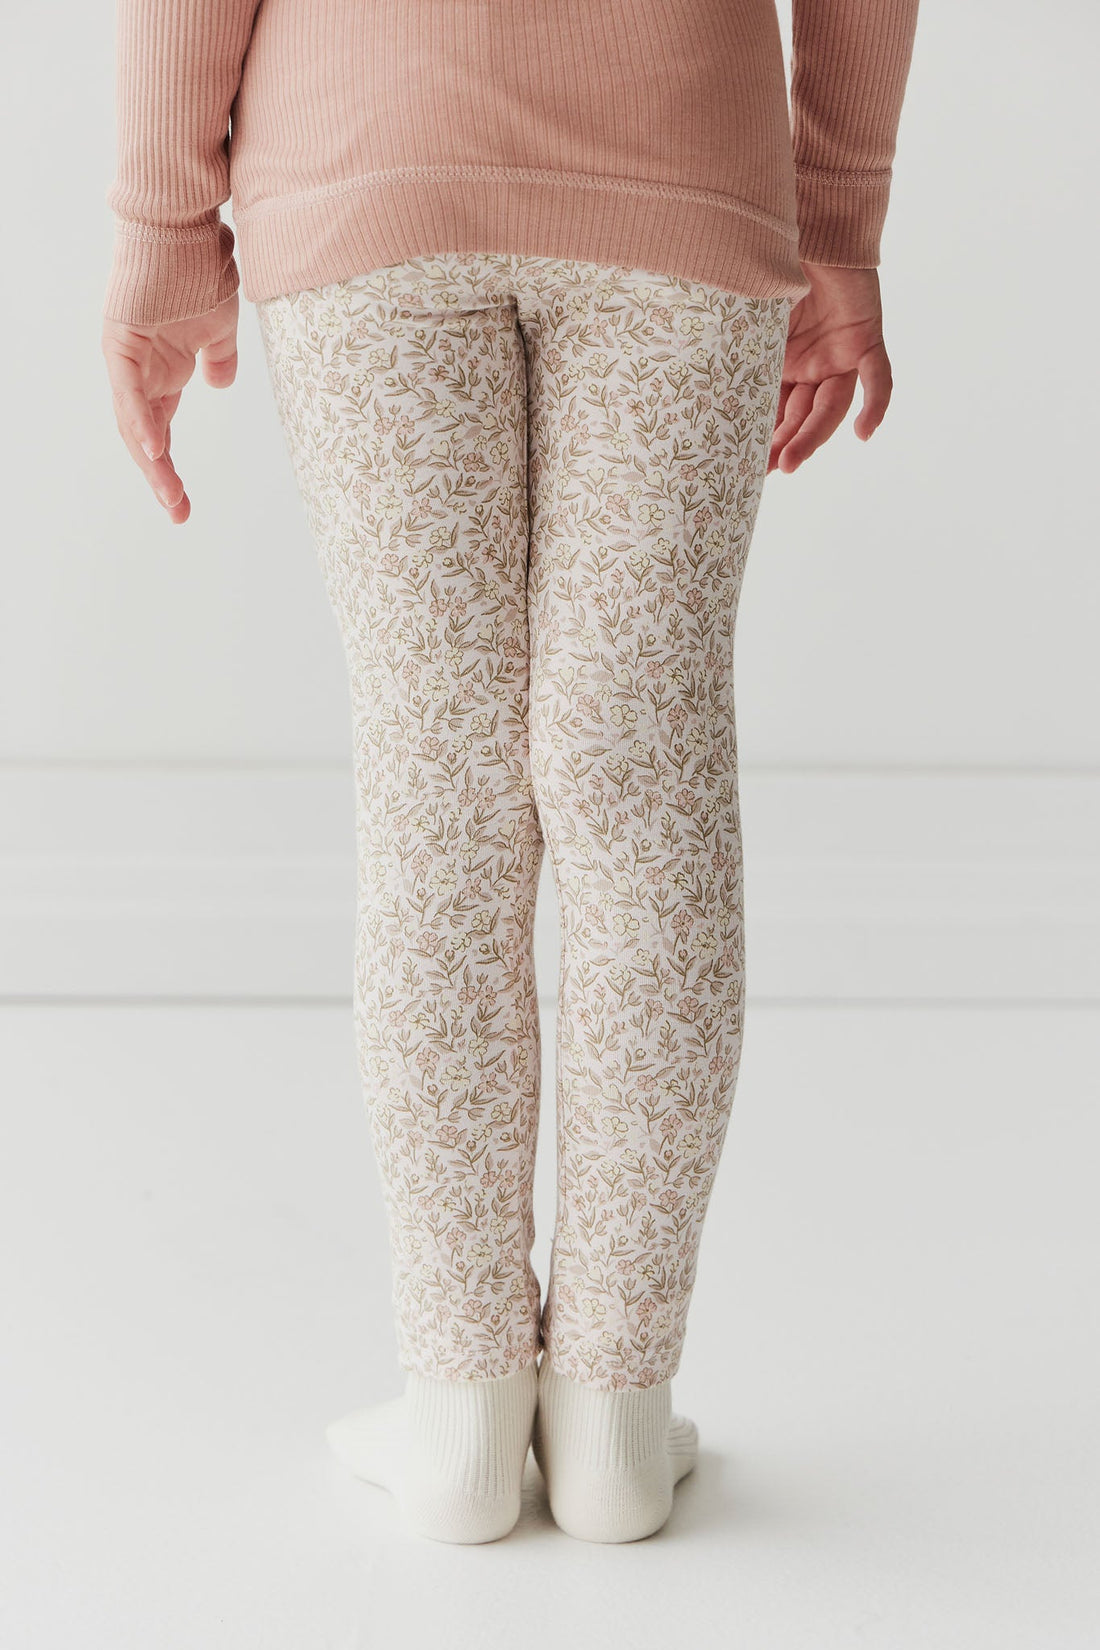 Organic Cotton Everyday Legging - Ariella Mauve Childrens Legging from Jamie Kay USA